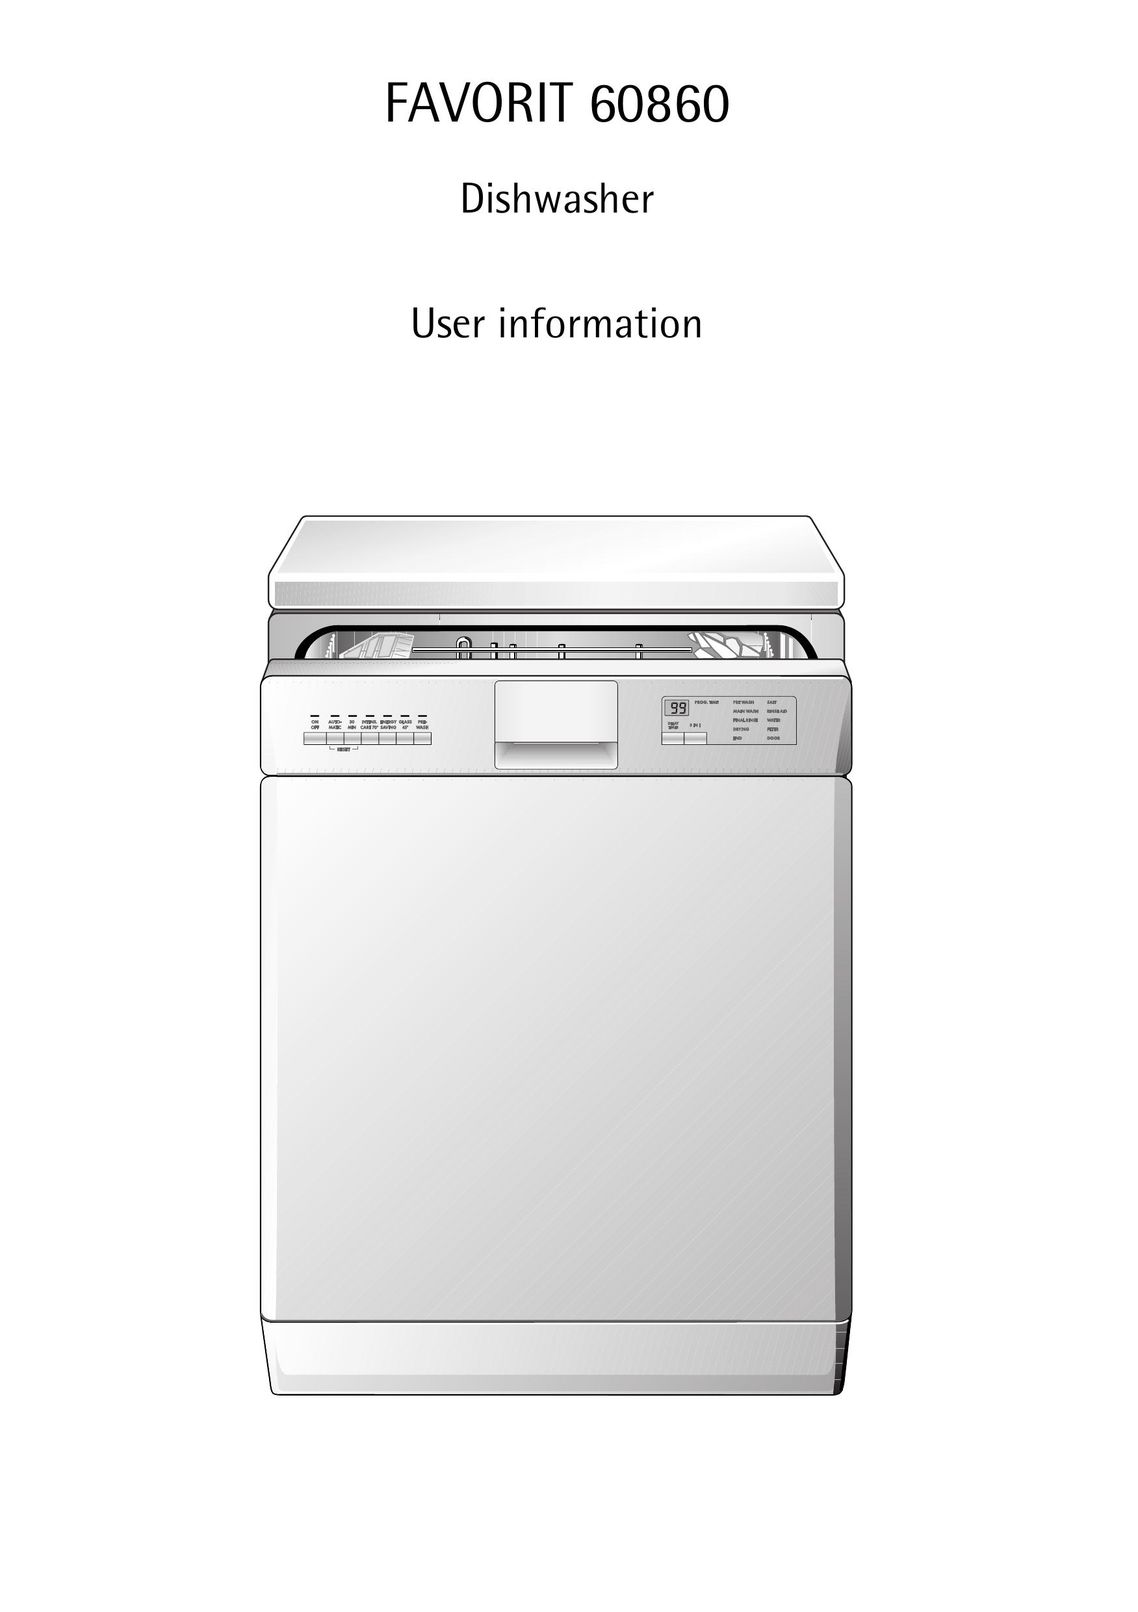 AEG 60860 Dishwasher User Manual